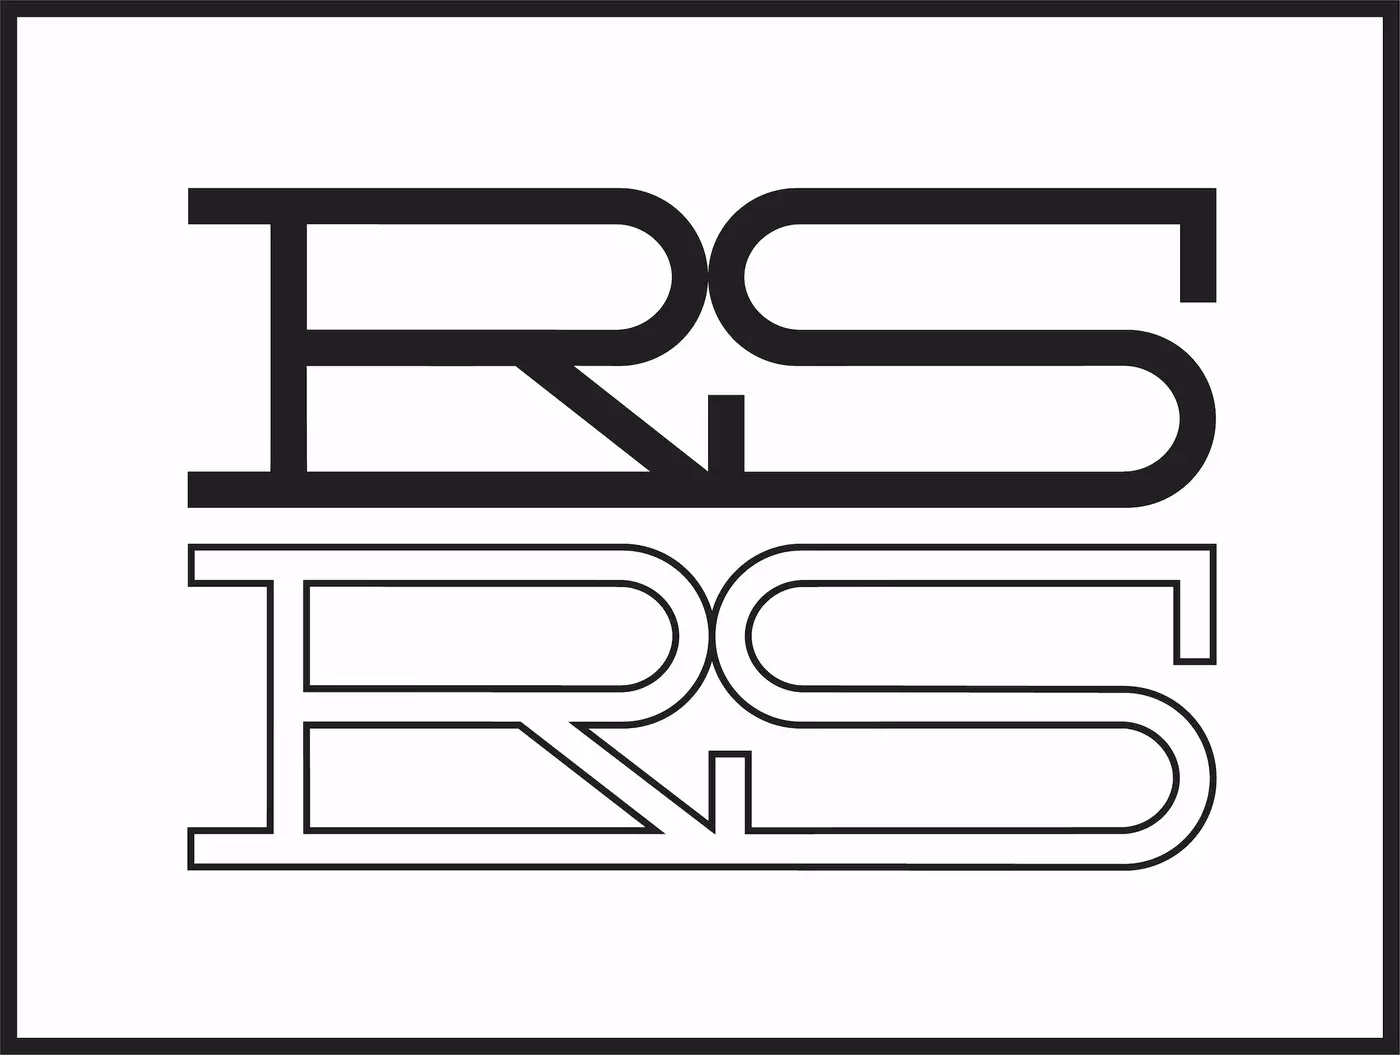 RSRS